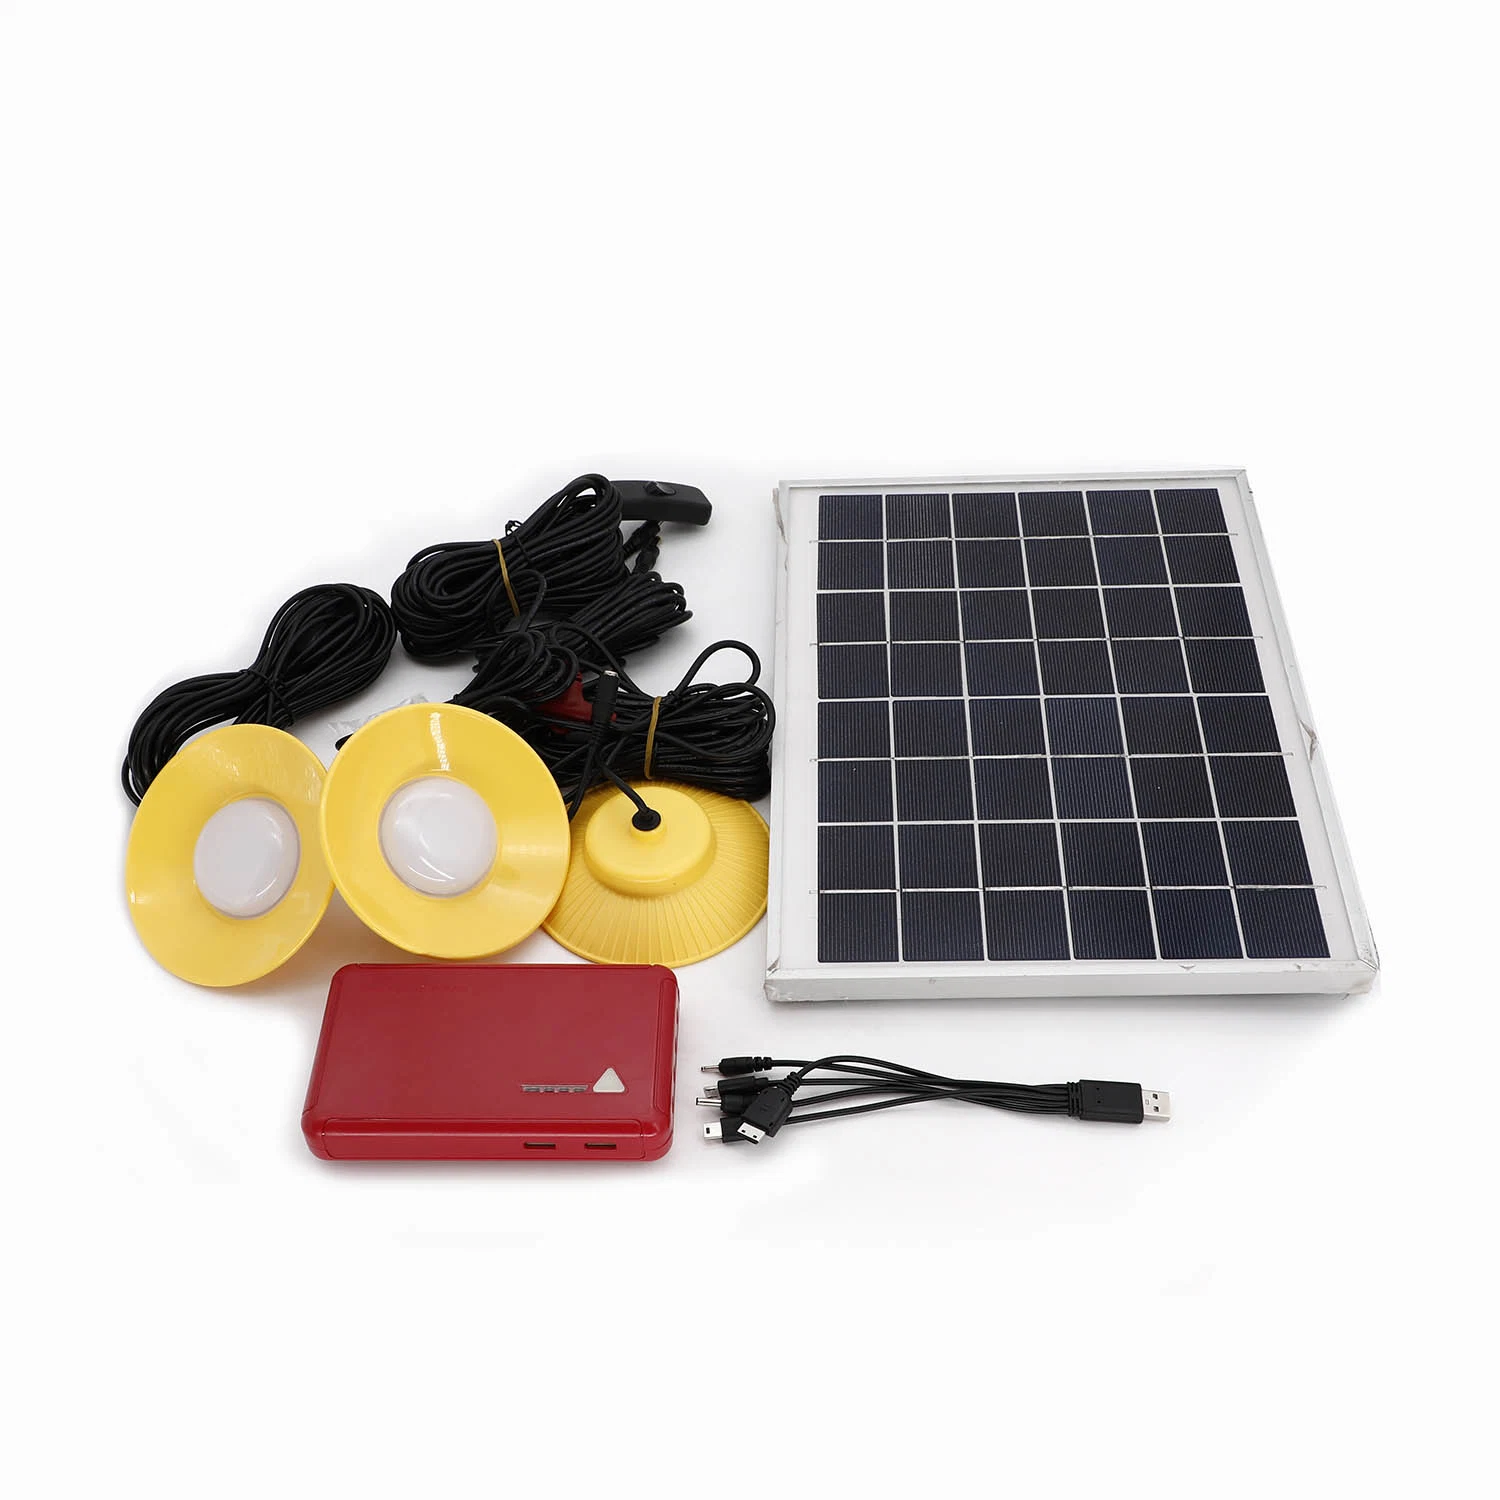 5200mAh Li-ion Battery Backup 10W Emergency Home Use Lighting Solar Panel Powered LED Lighting System Kit Light Sf-910